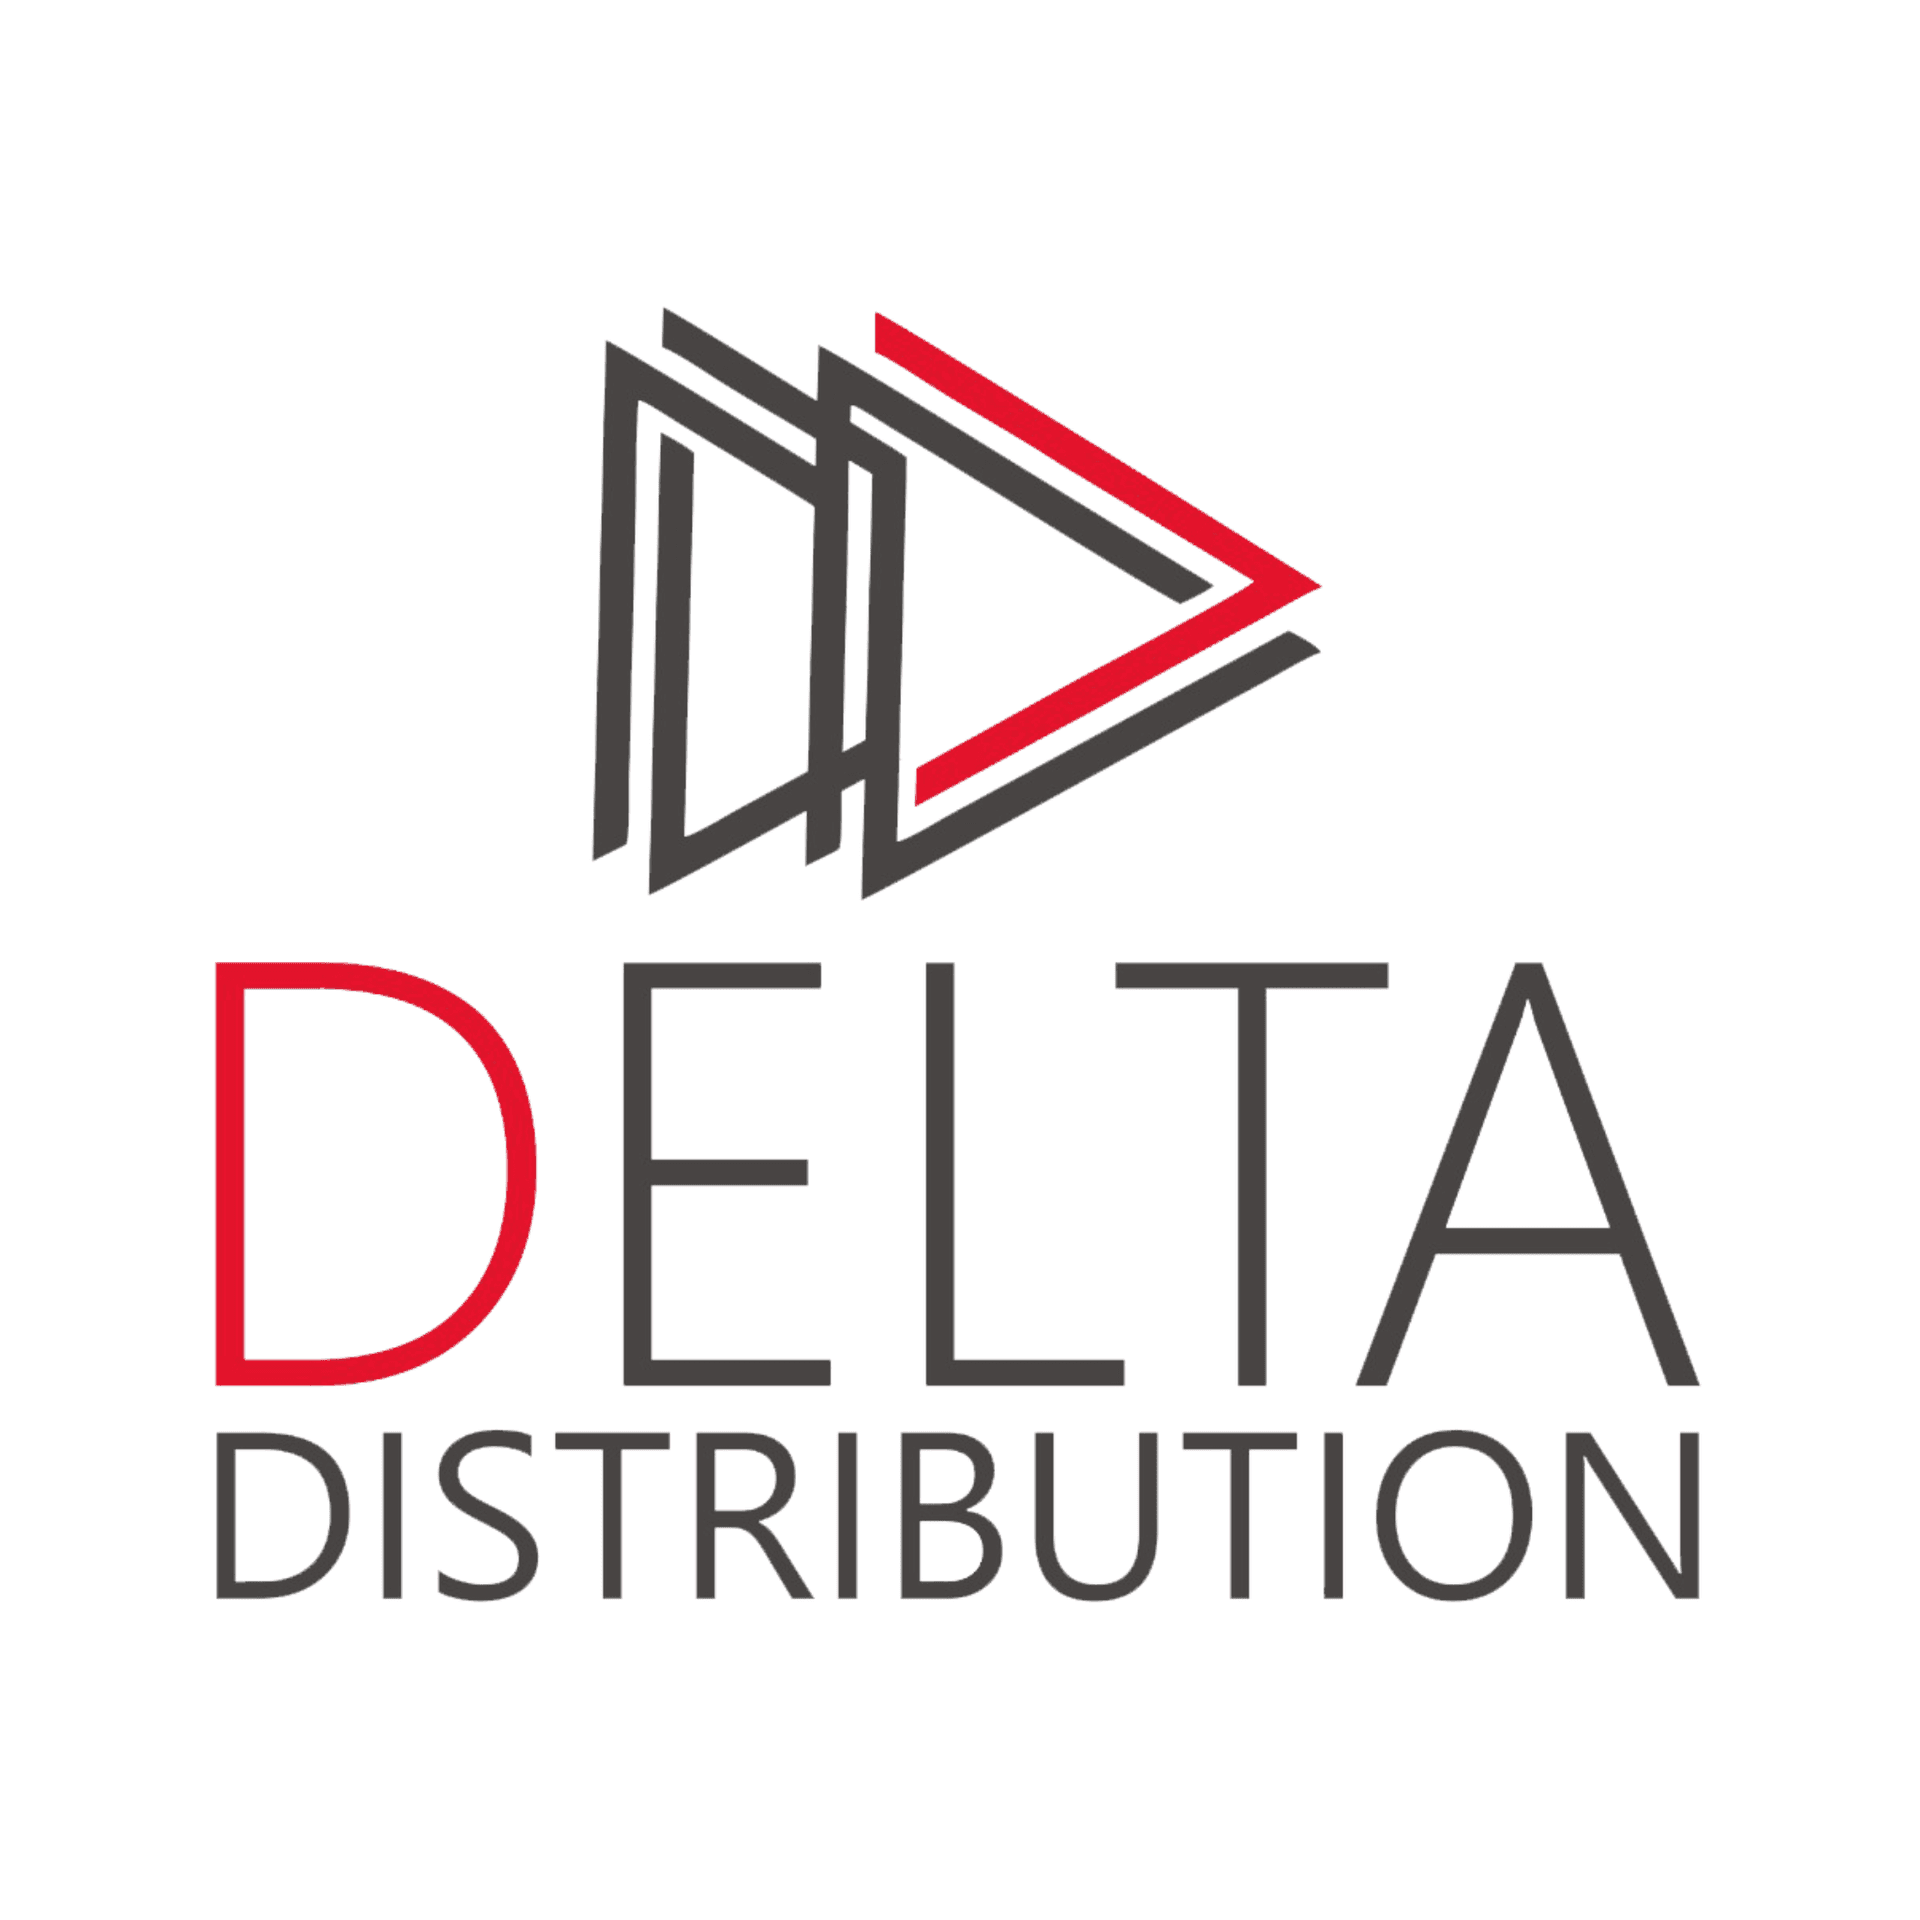 Delta Distribution Co., Ltd